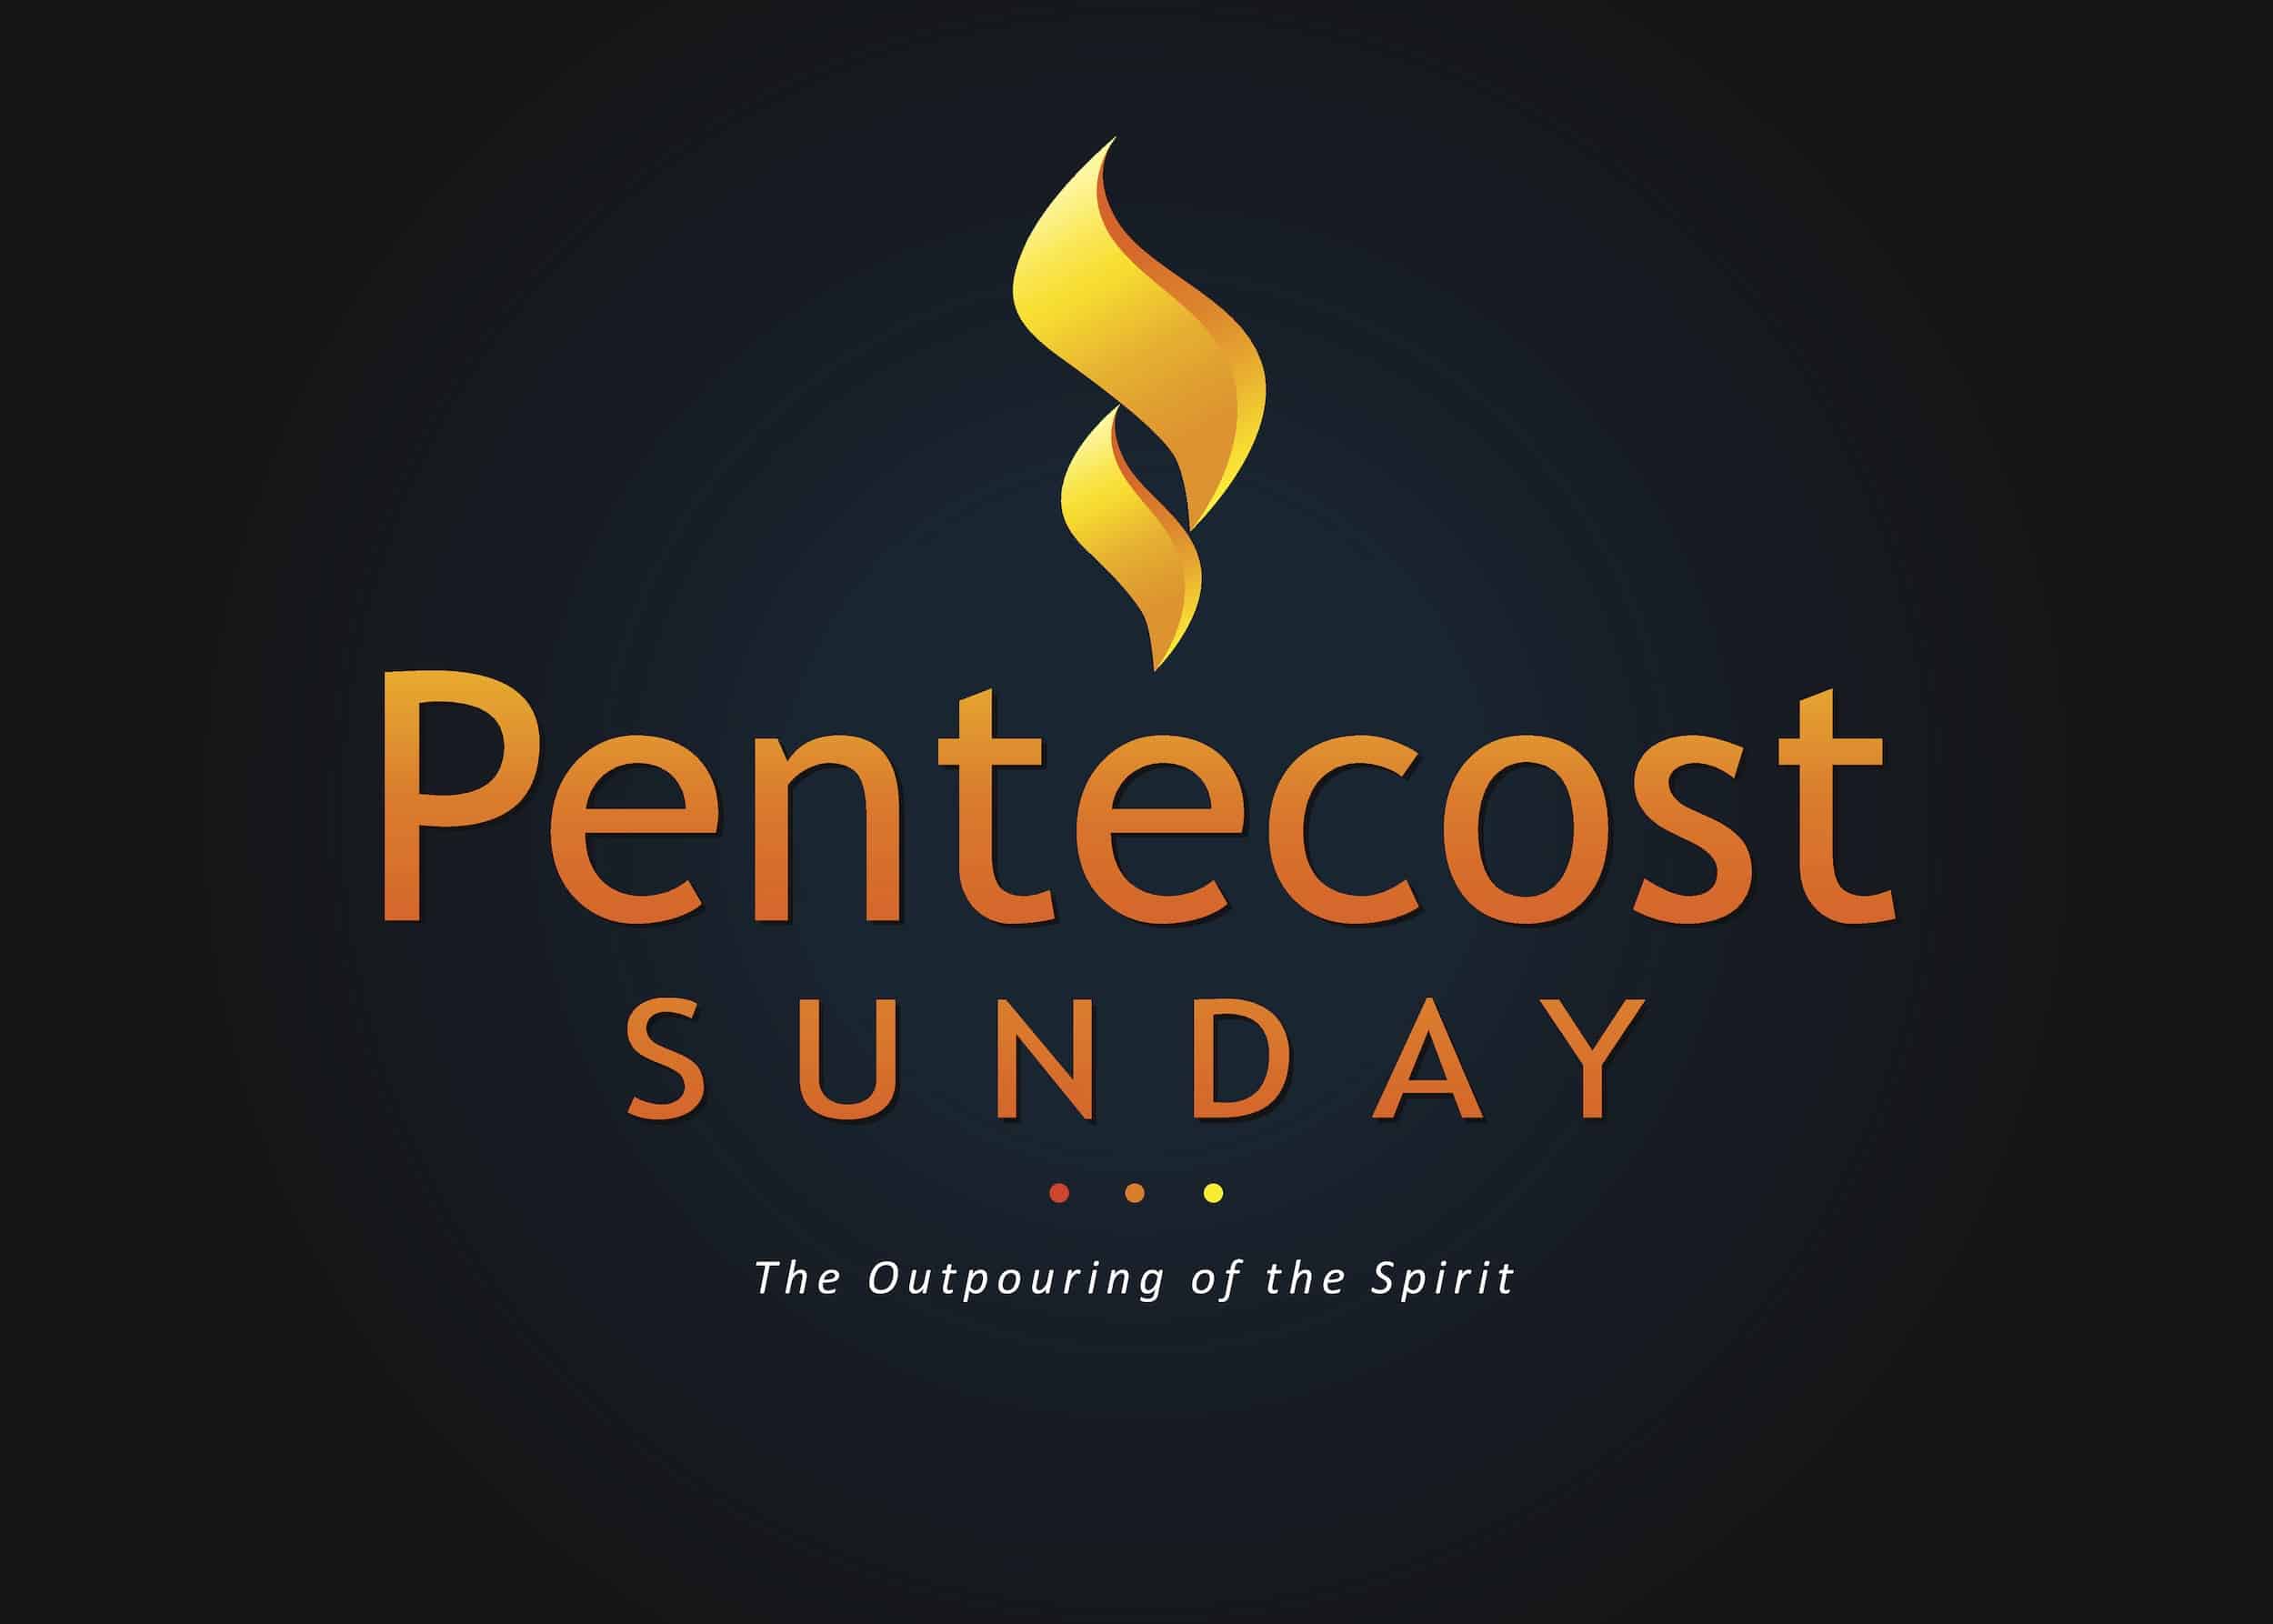 Pentecost Sunday title